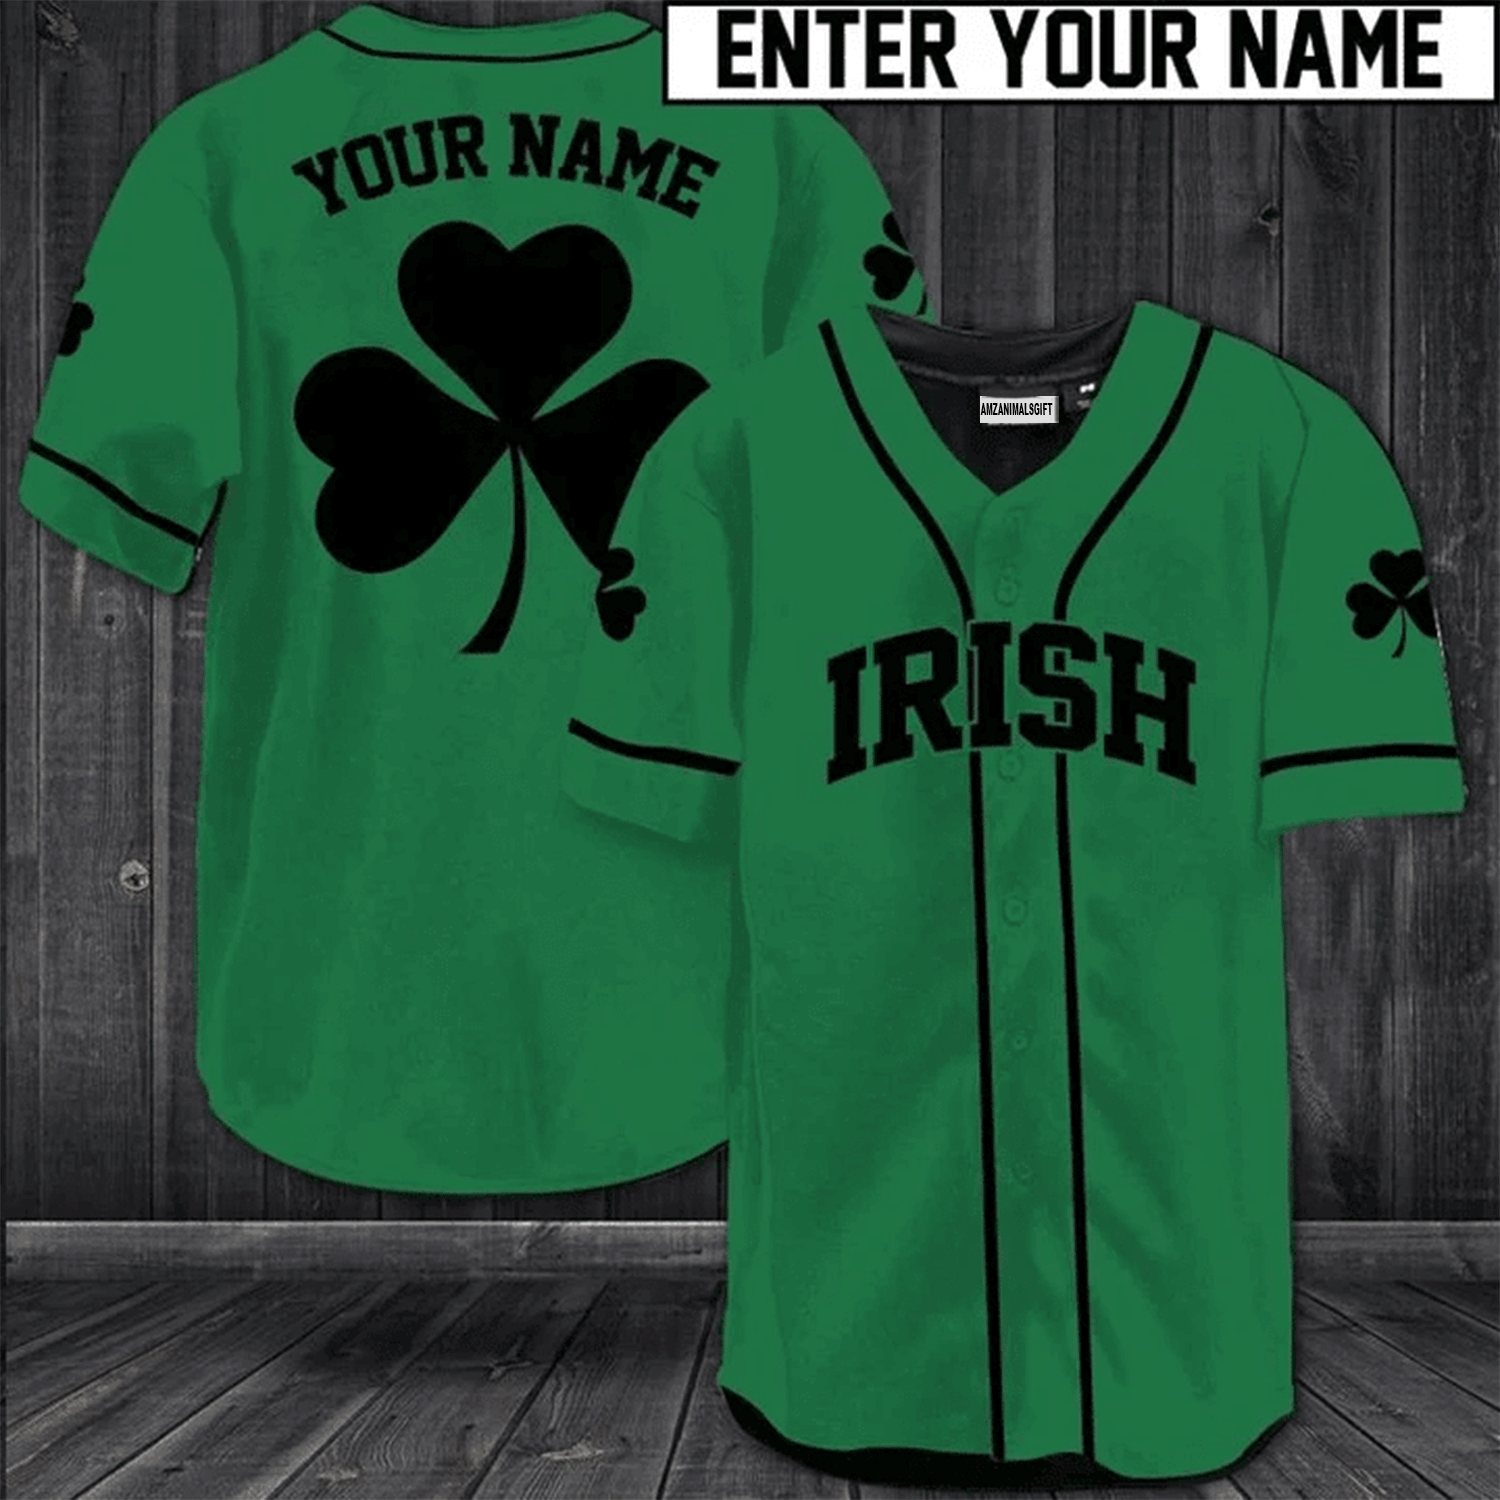 Customized Baseball Jersey Shirt - Personalized Name Irish Green Baseball Jersey Shirt For Men & Women, Perfect Gift For Baseball Lover